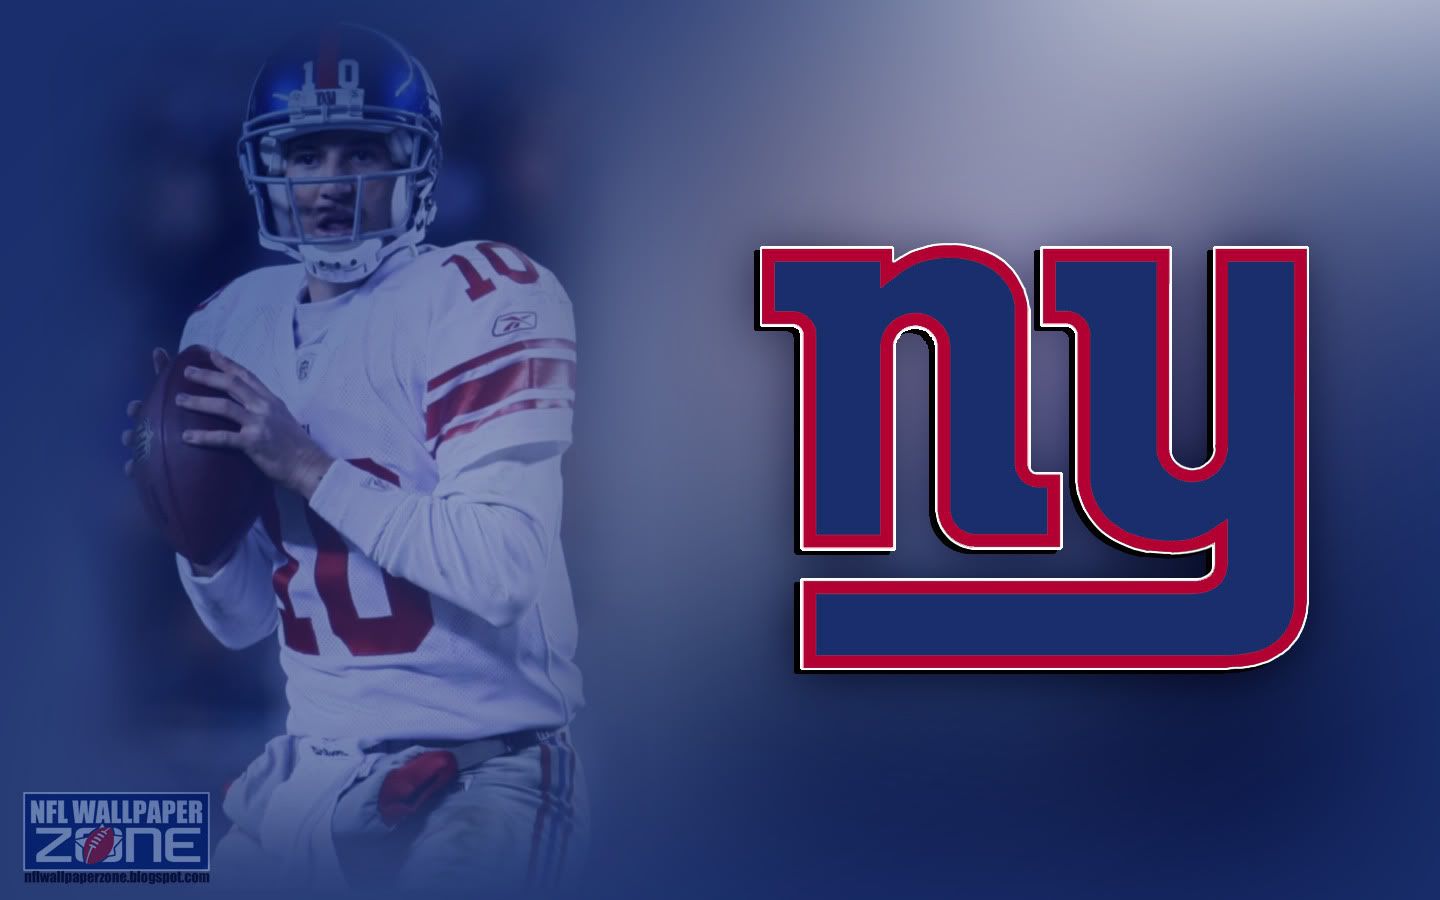 NFL Wallpaper Zone: New York Giants